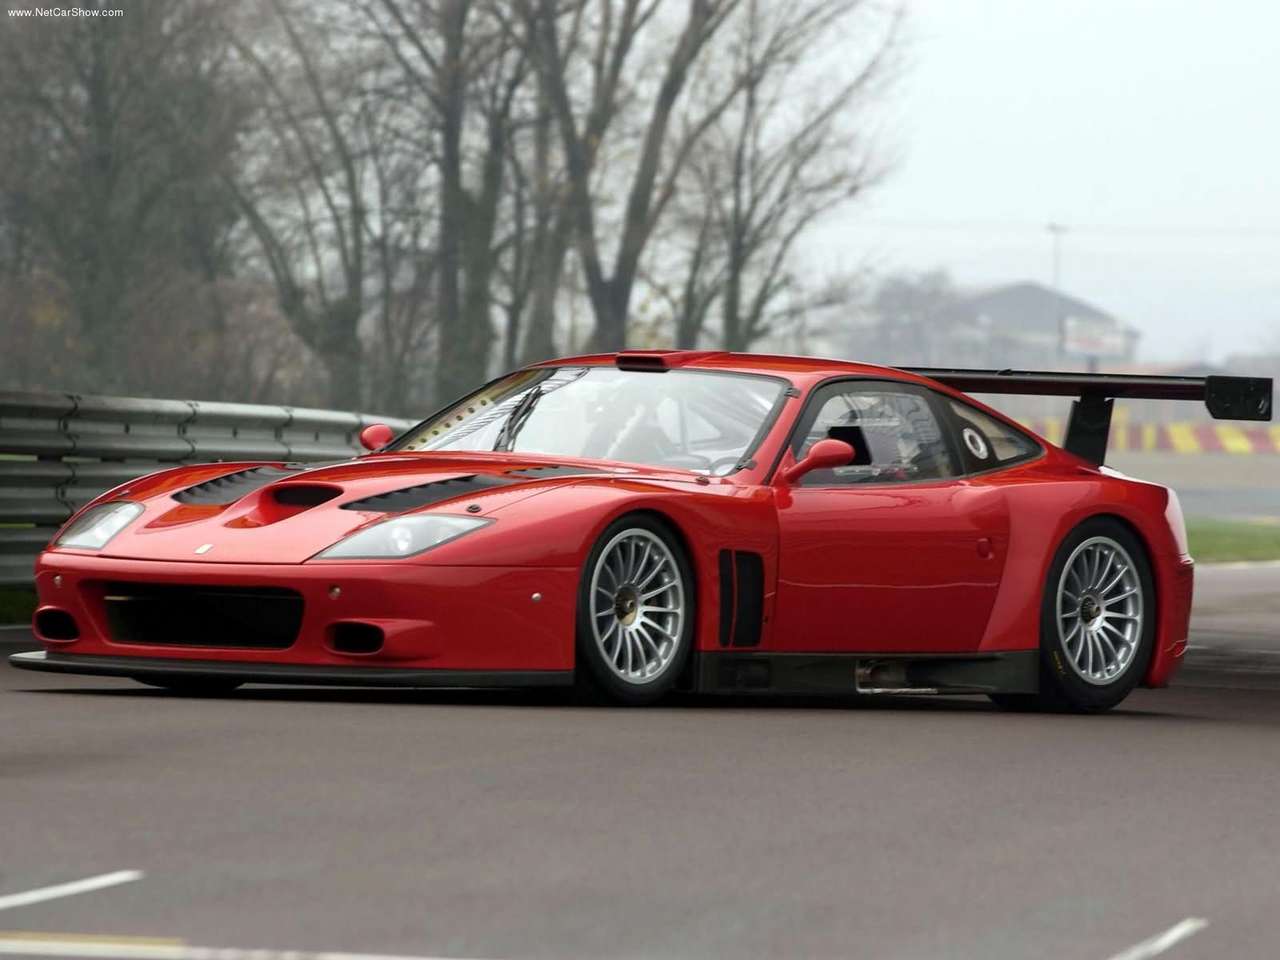 Ferrari - Populaire francais d'automobiles: 2004 Ferrari 575GTC